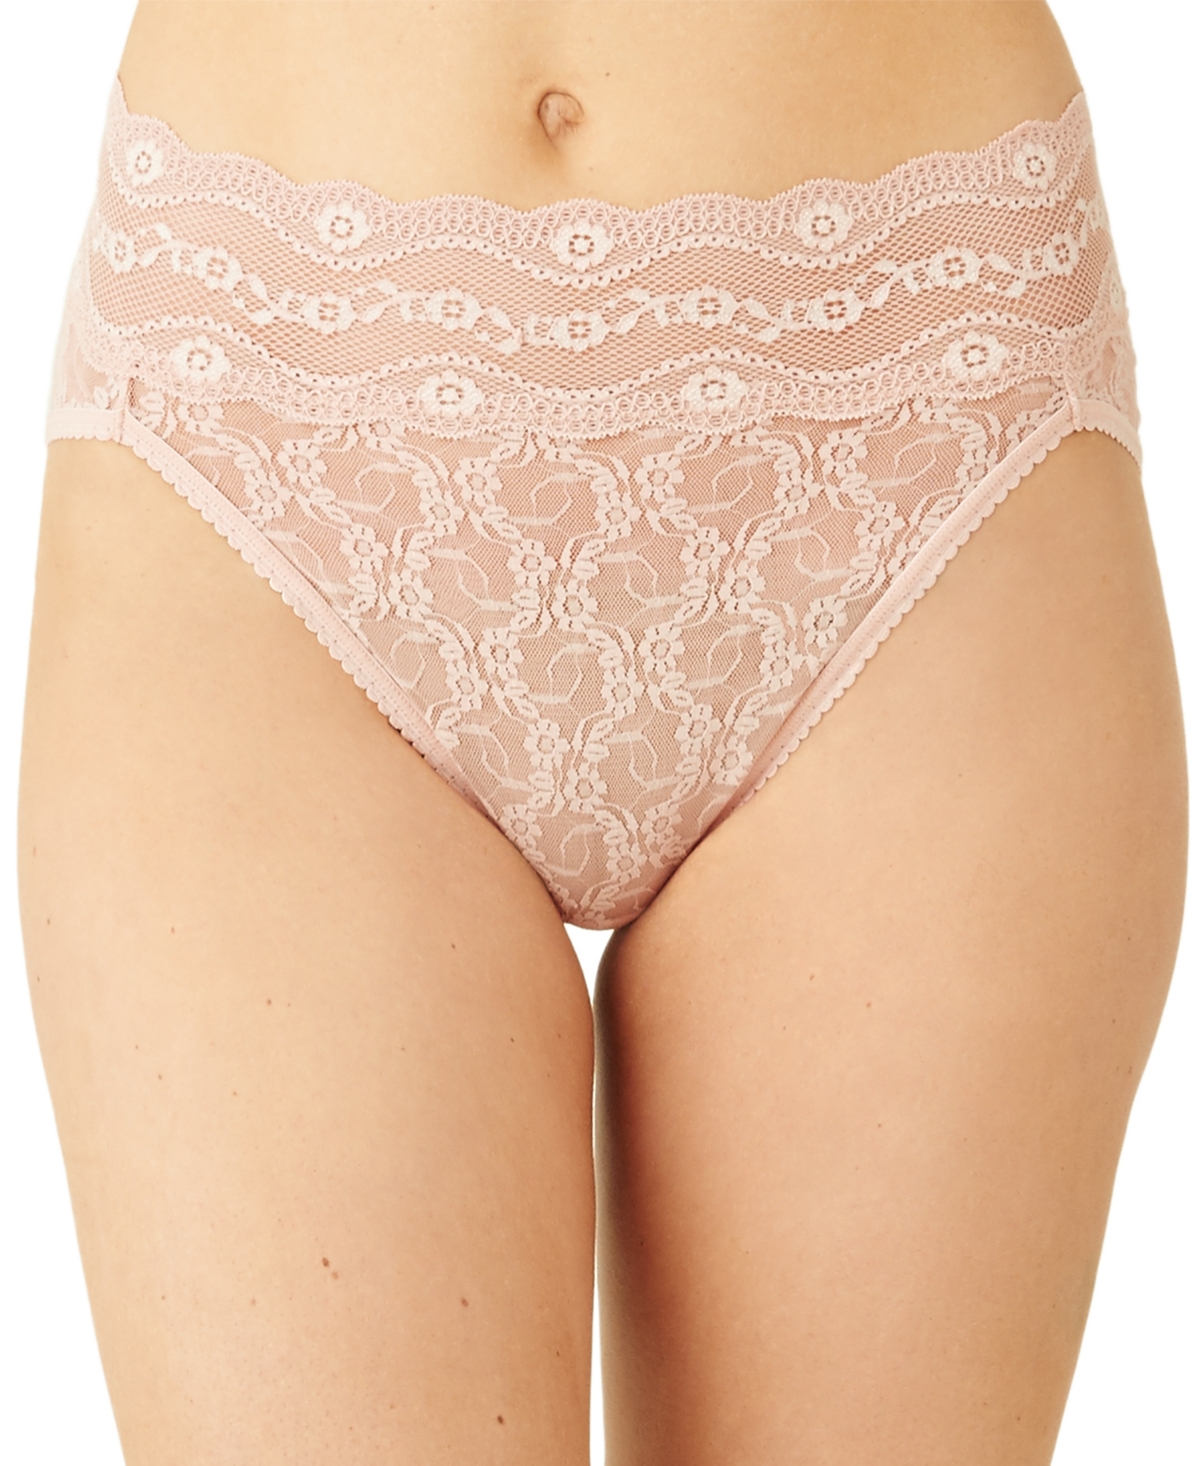 by Wacoal Women's Lace Kiss High-Leg Brief Underwear 978382 - White